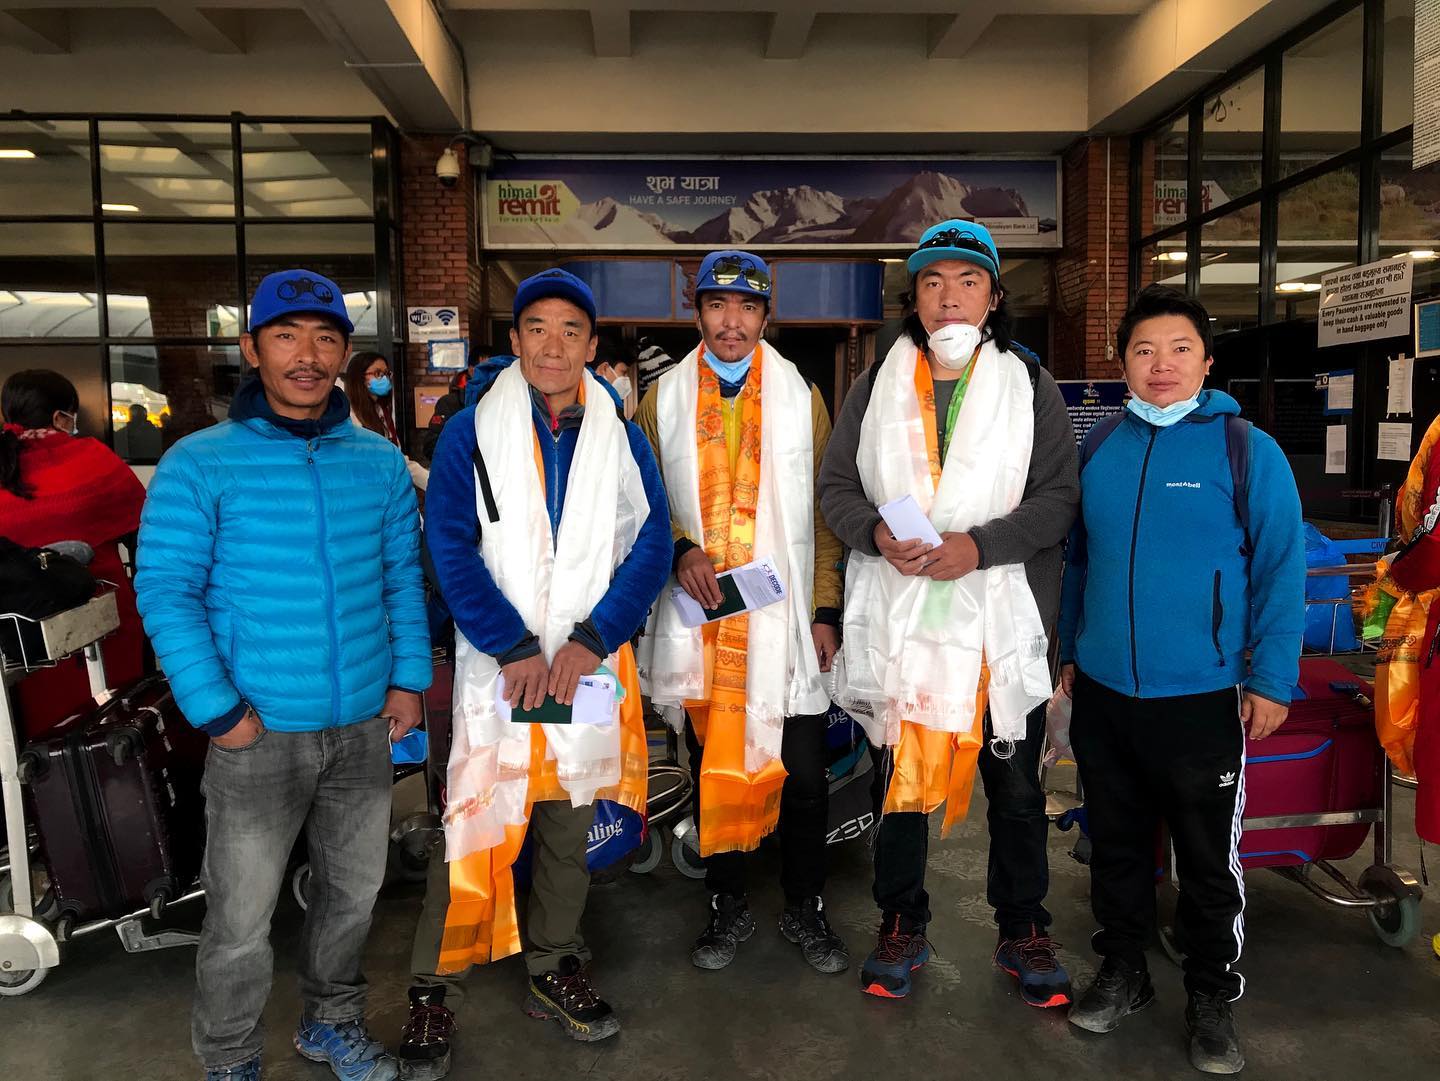 Мингма Галйе Шерпа (Mingma Gyalje Sherpa), Дава Тенцинг Шерпа (Dawa Tenzing Sherpa), Килу Пемба Шерпа (Kilu Pemba Sherpa) перед вылетом в Исламабад